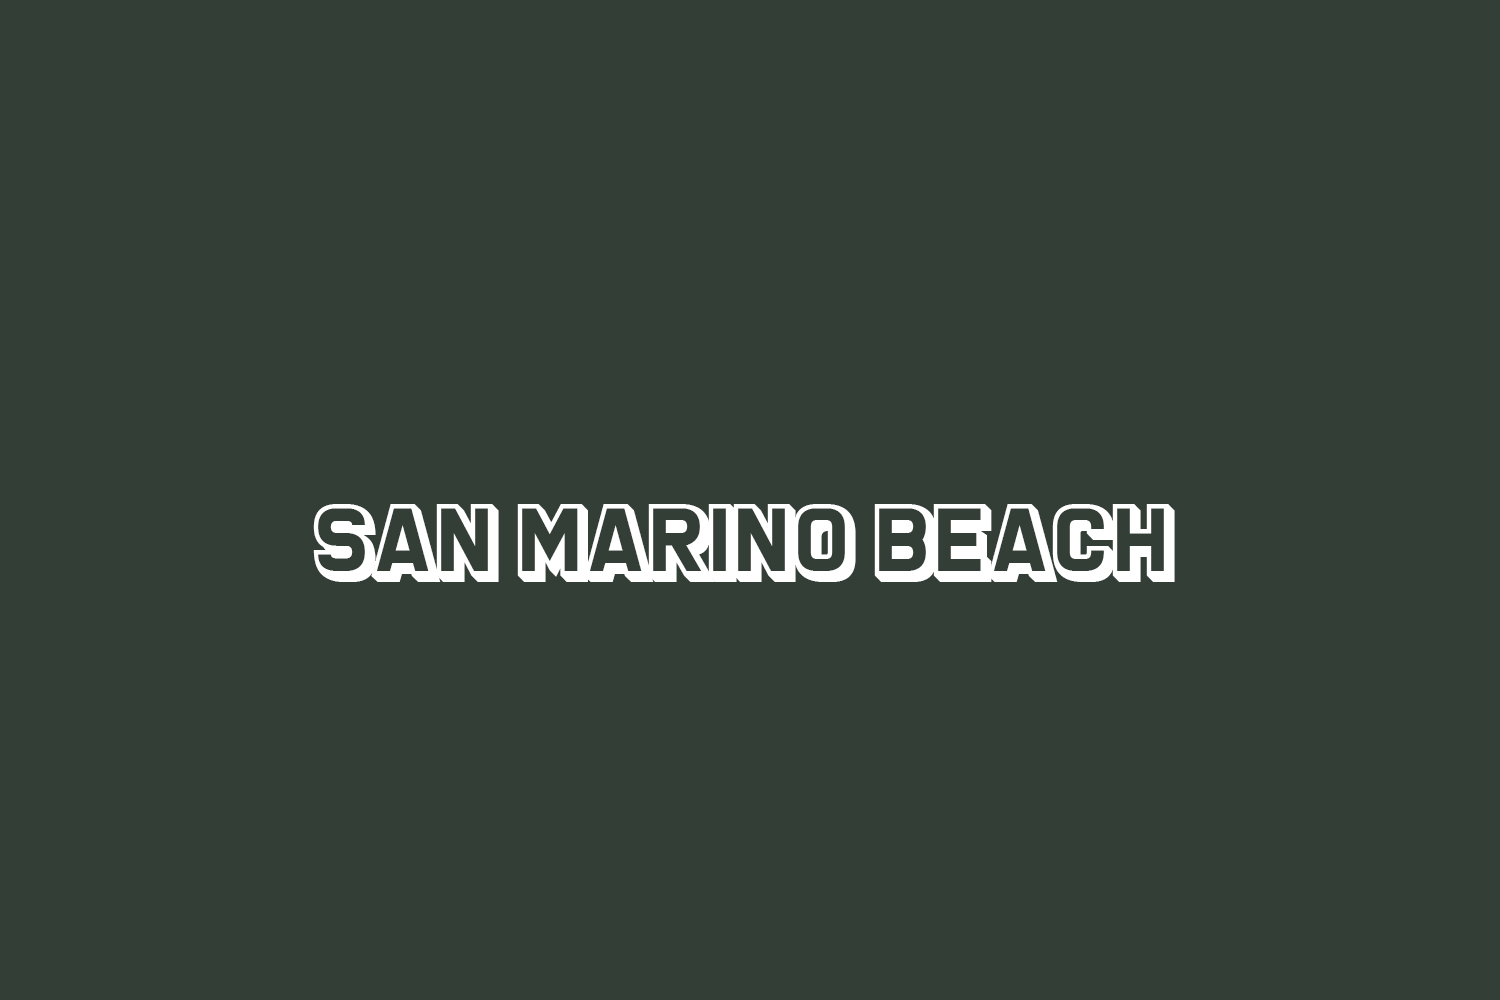 San Marino Beach Free Font